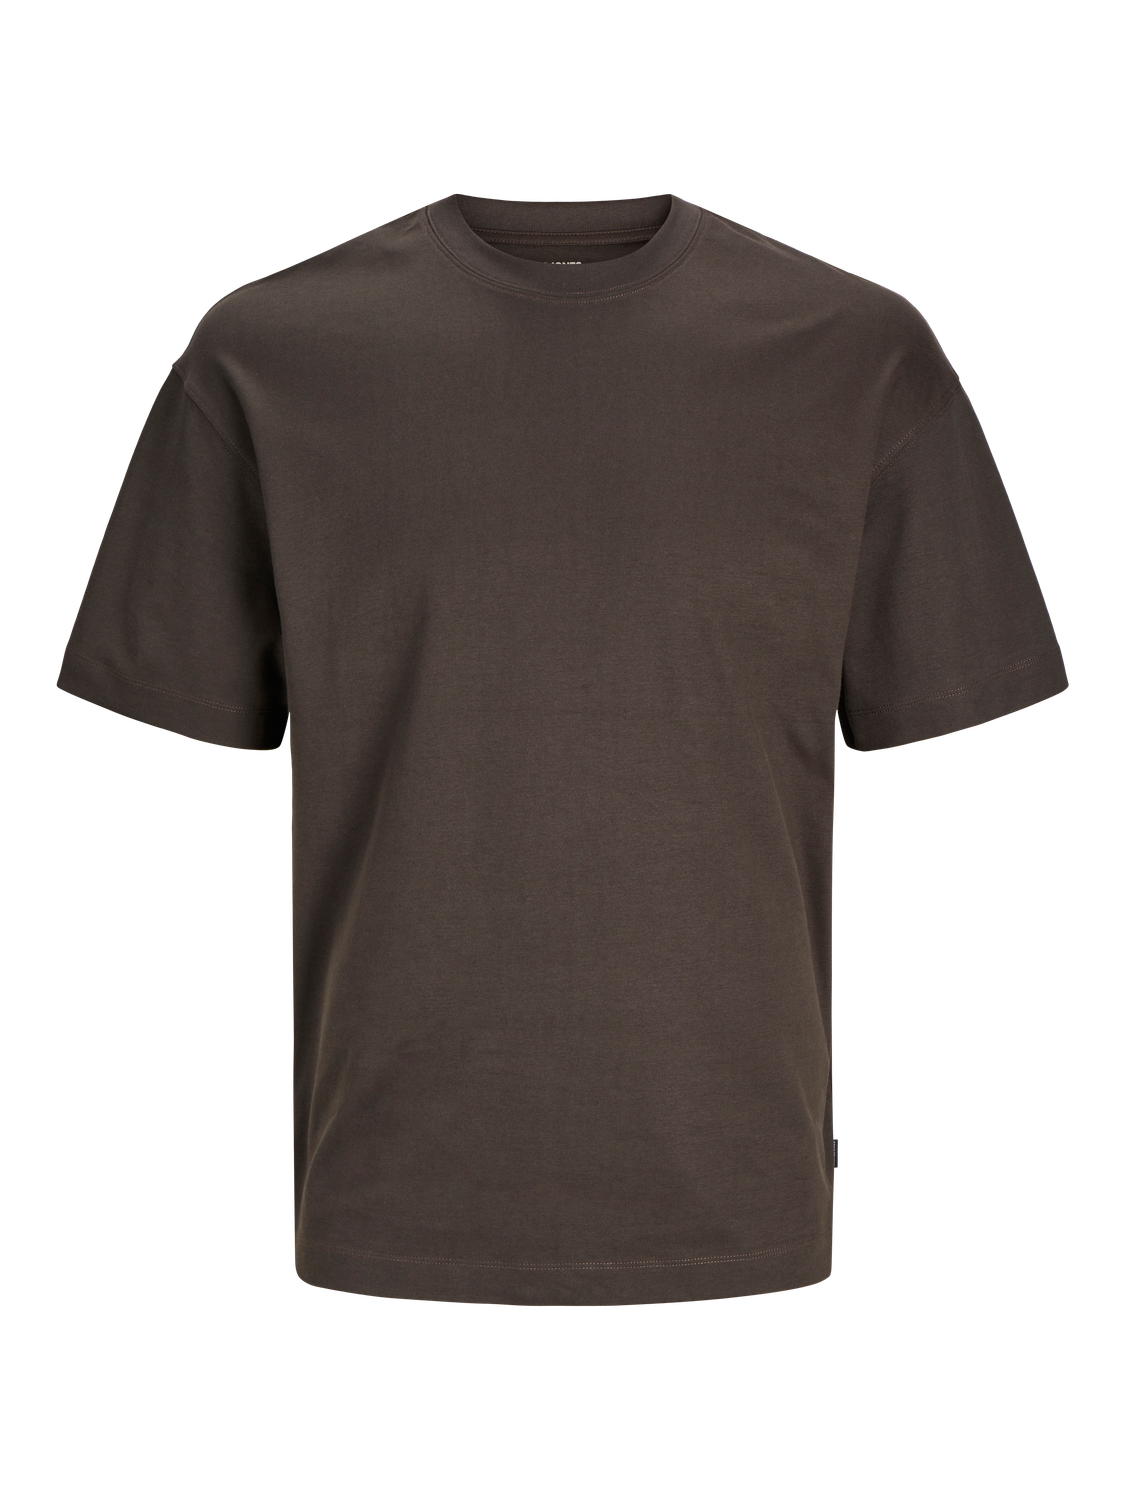 Jack & Jones Camiseta Liso Cuello redondo -Mulch - 12254412